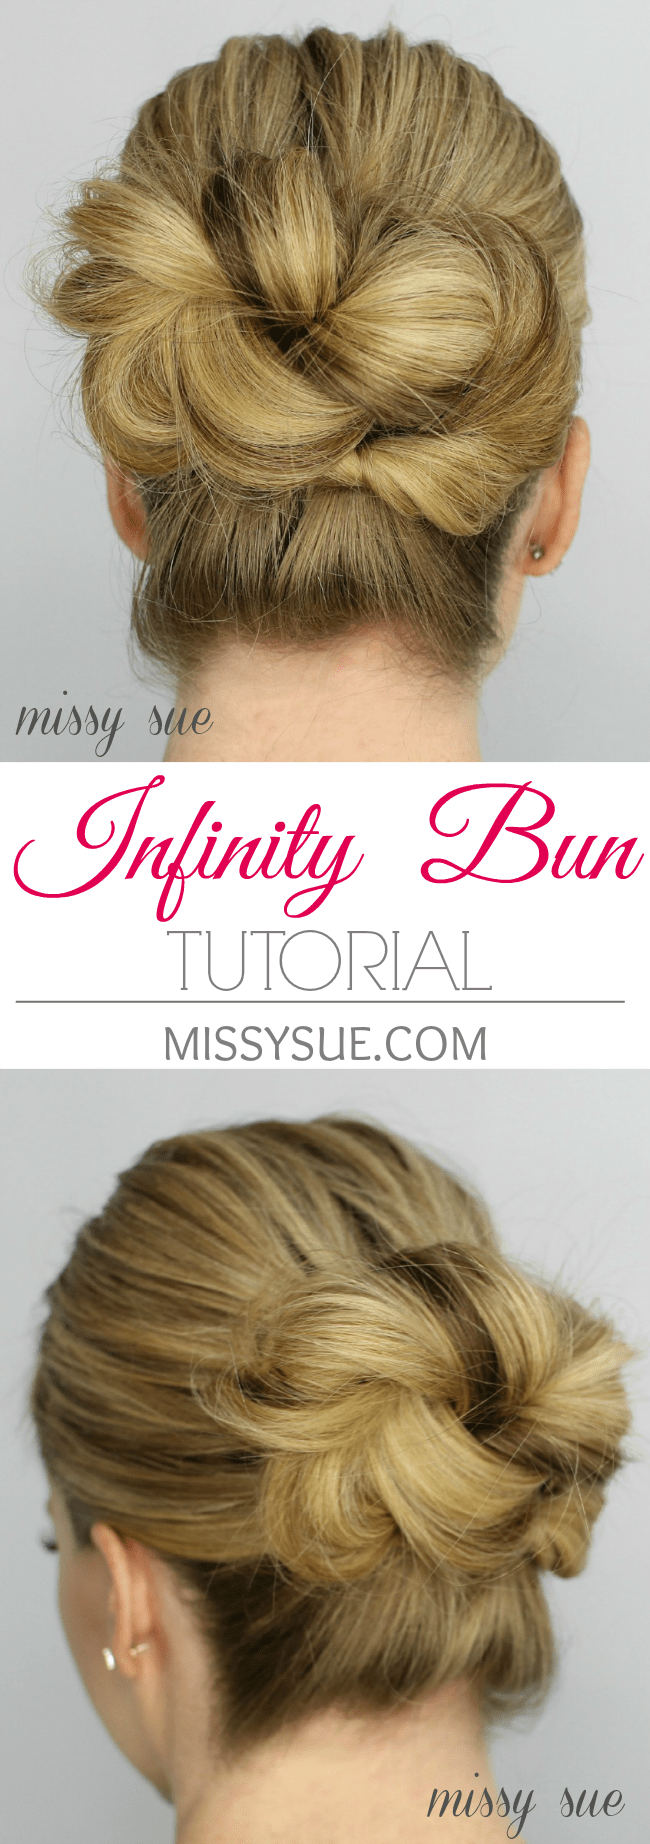 Infinity Bun Tutorial | MissySue.com